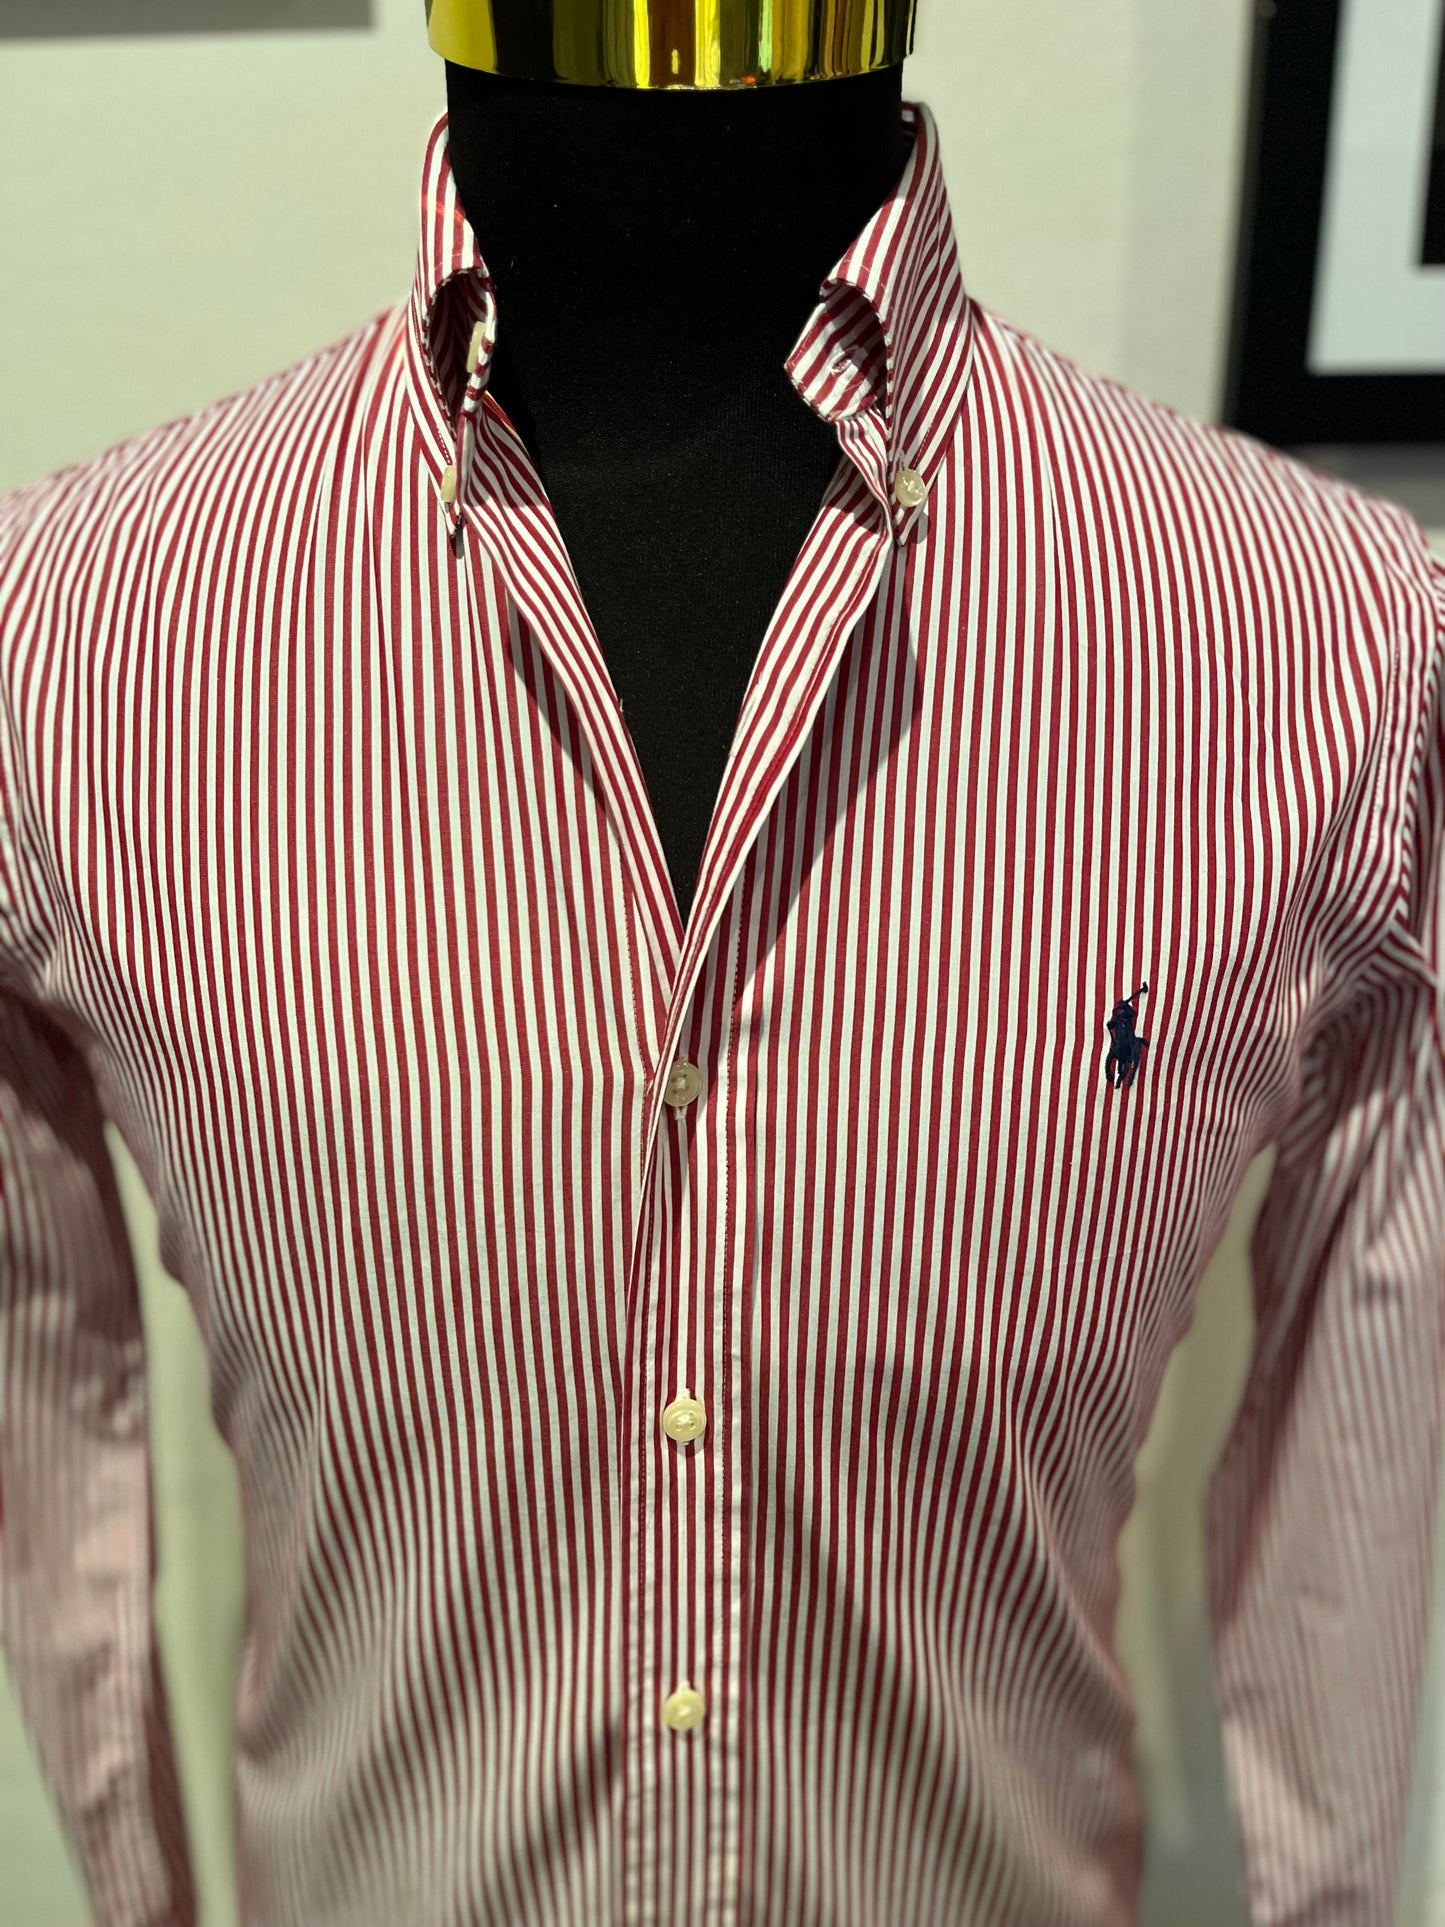 Ralph Lauren 100% Cotton Red White Stripe Shirt Size S Size Classic Fit